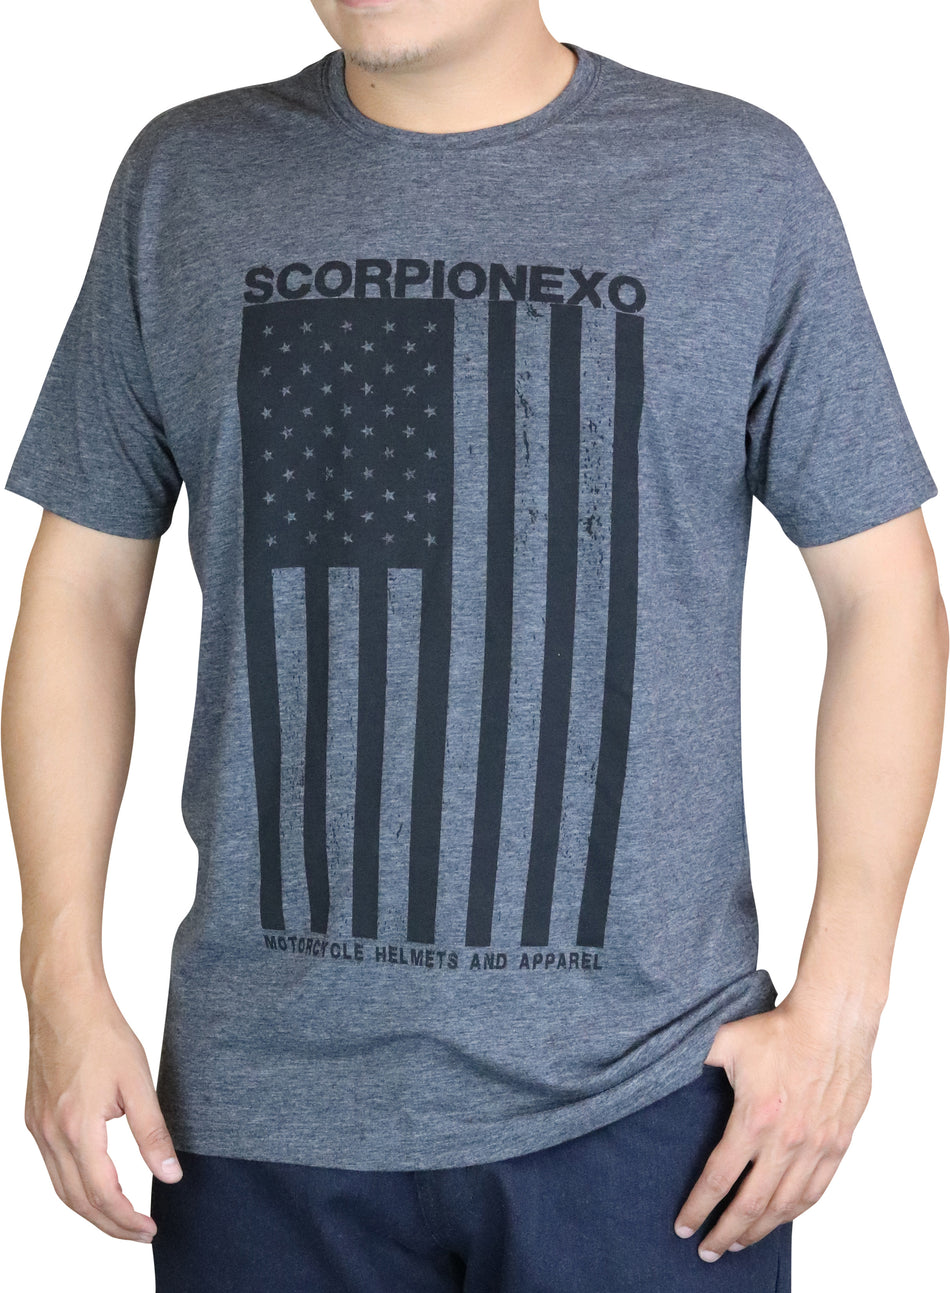 SCORPION EXO Americana Shirt Black/Charcoal Xl 61-750-06